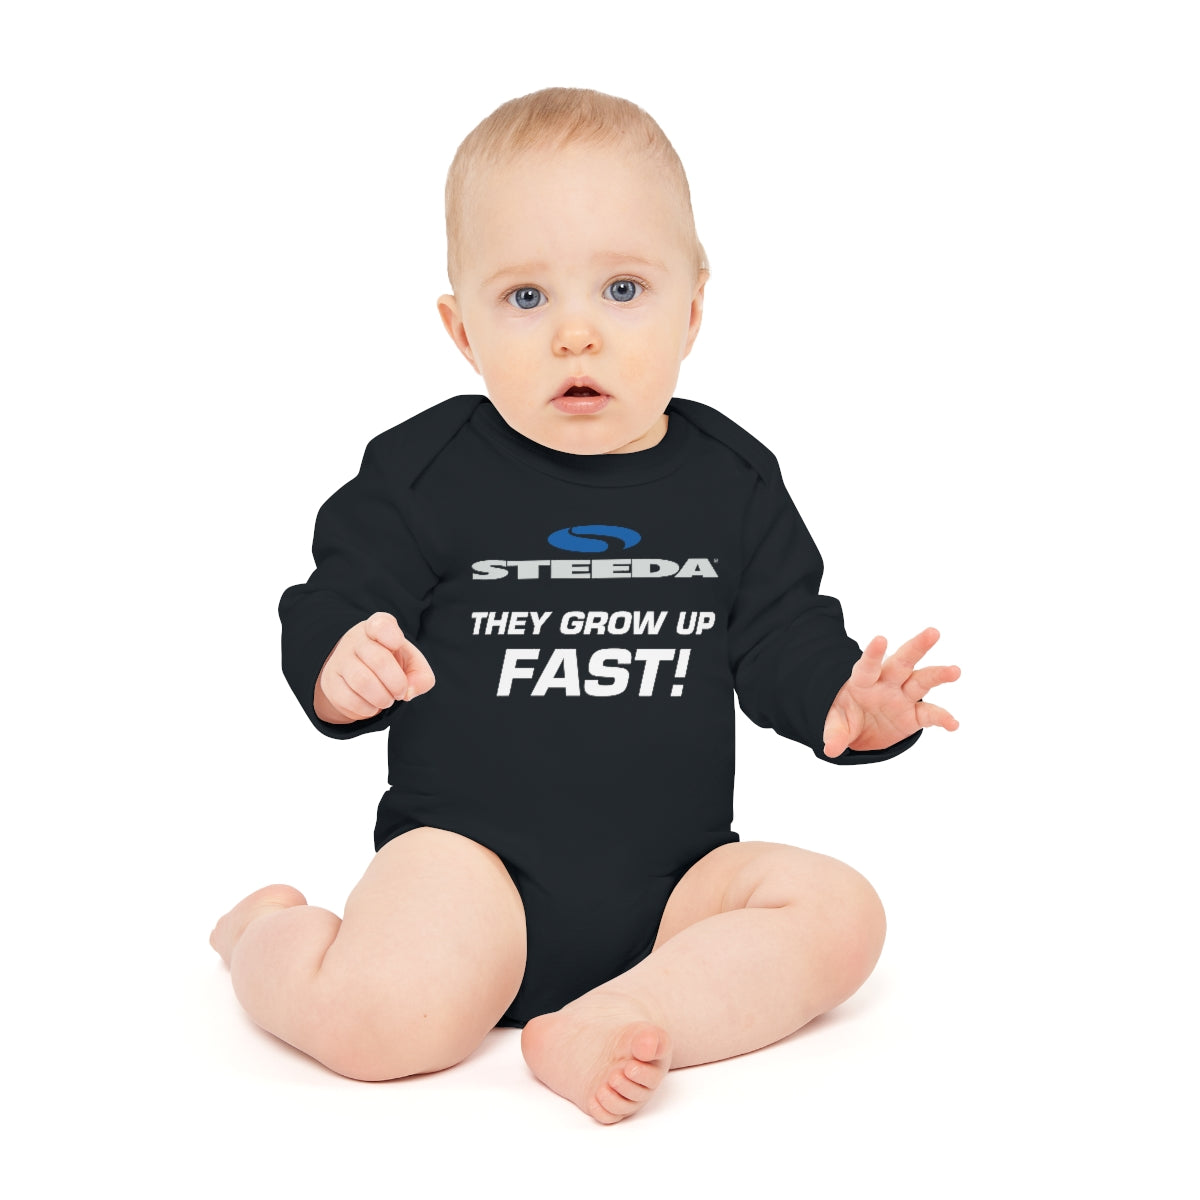 Steeda "They Grow Up Fast!" Baby Organic Bodysuit - White / Black